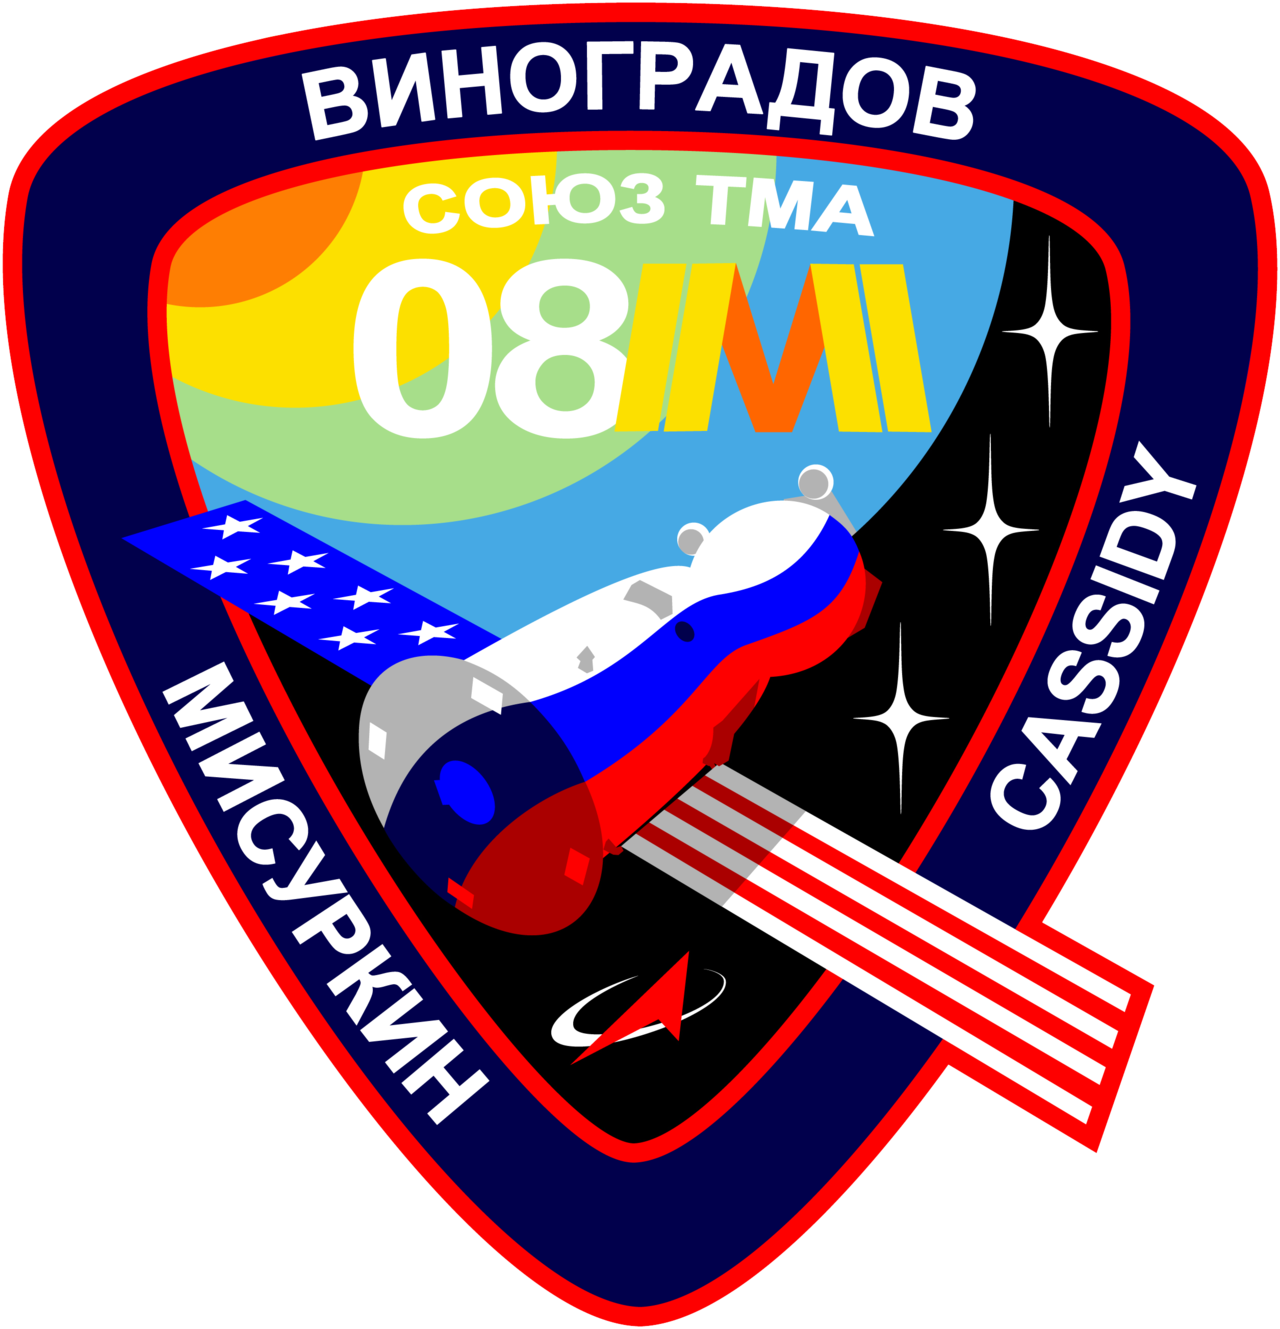 Mission patch for Soyuz TMA-07M